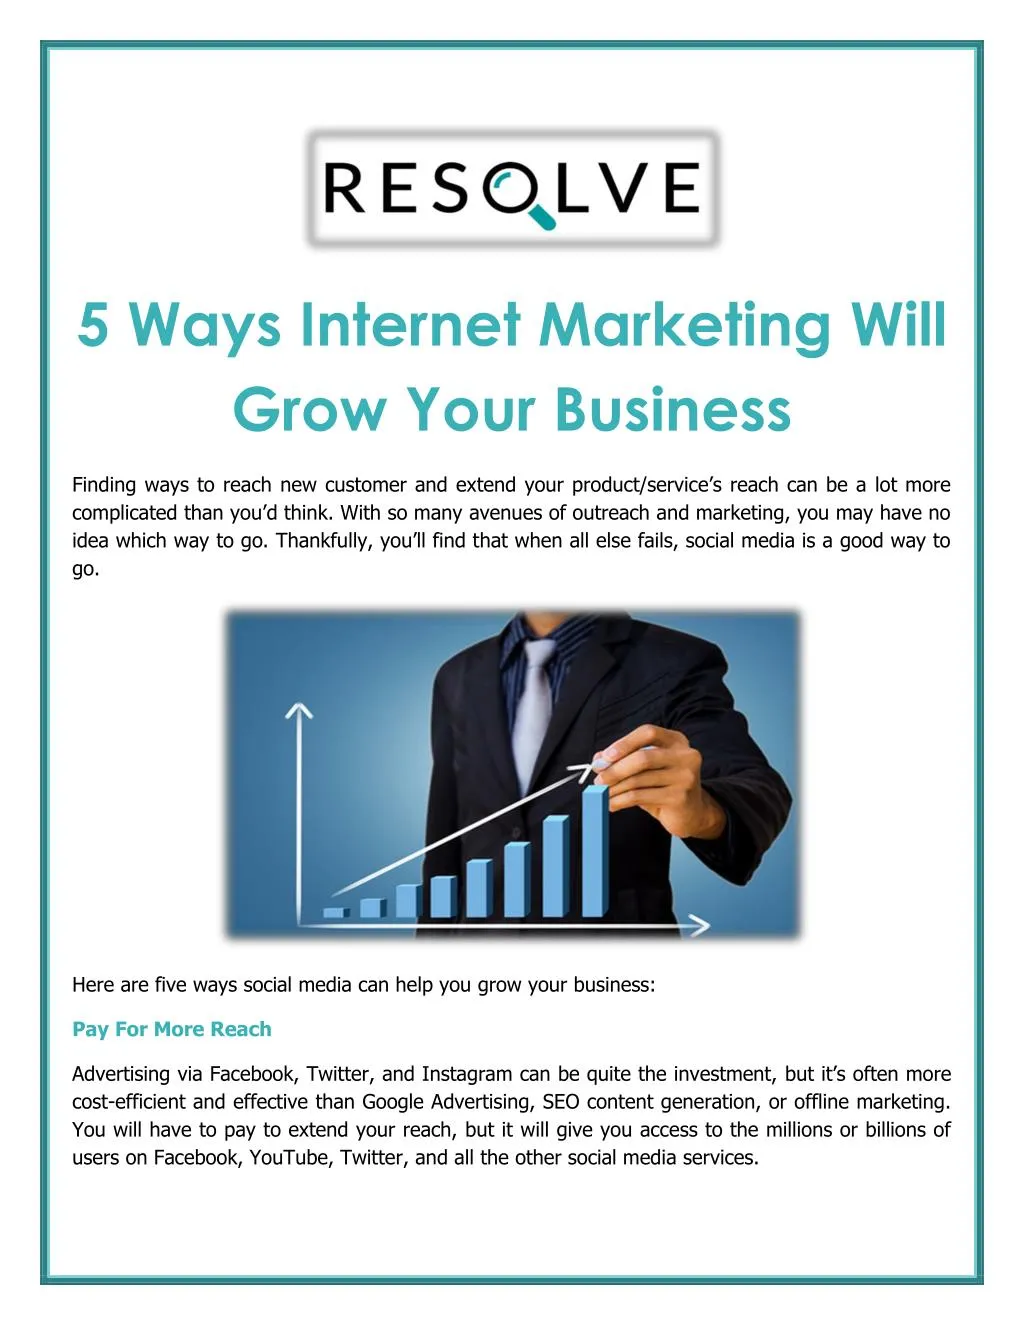 5 ways internet marketing will grow your business